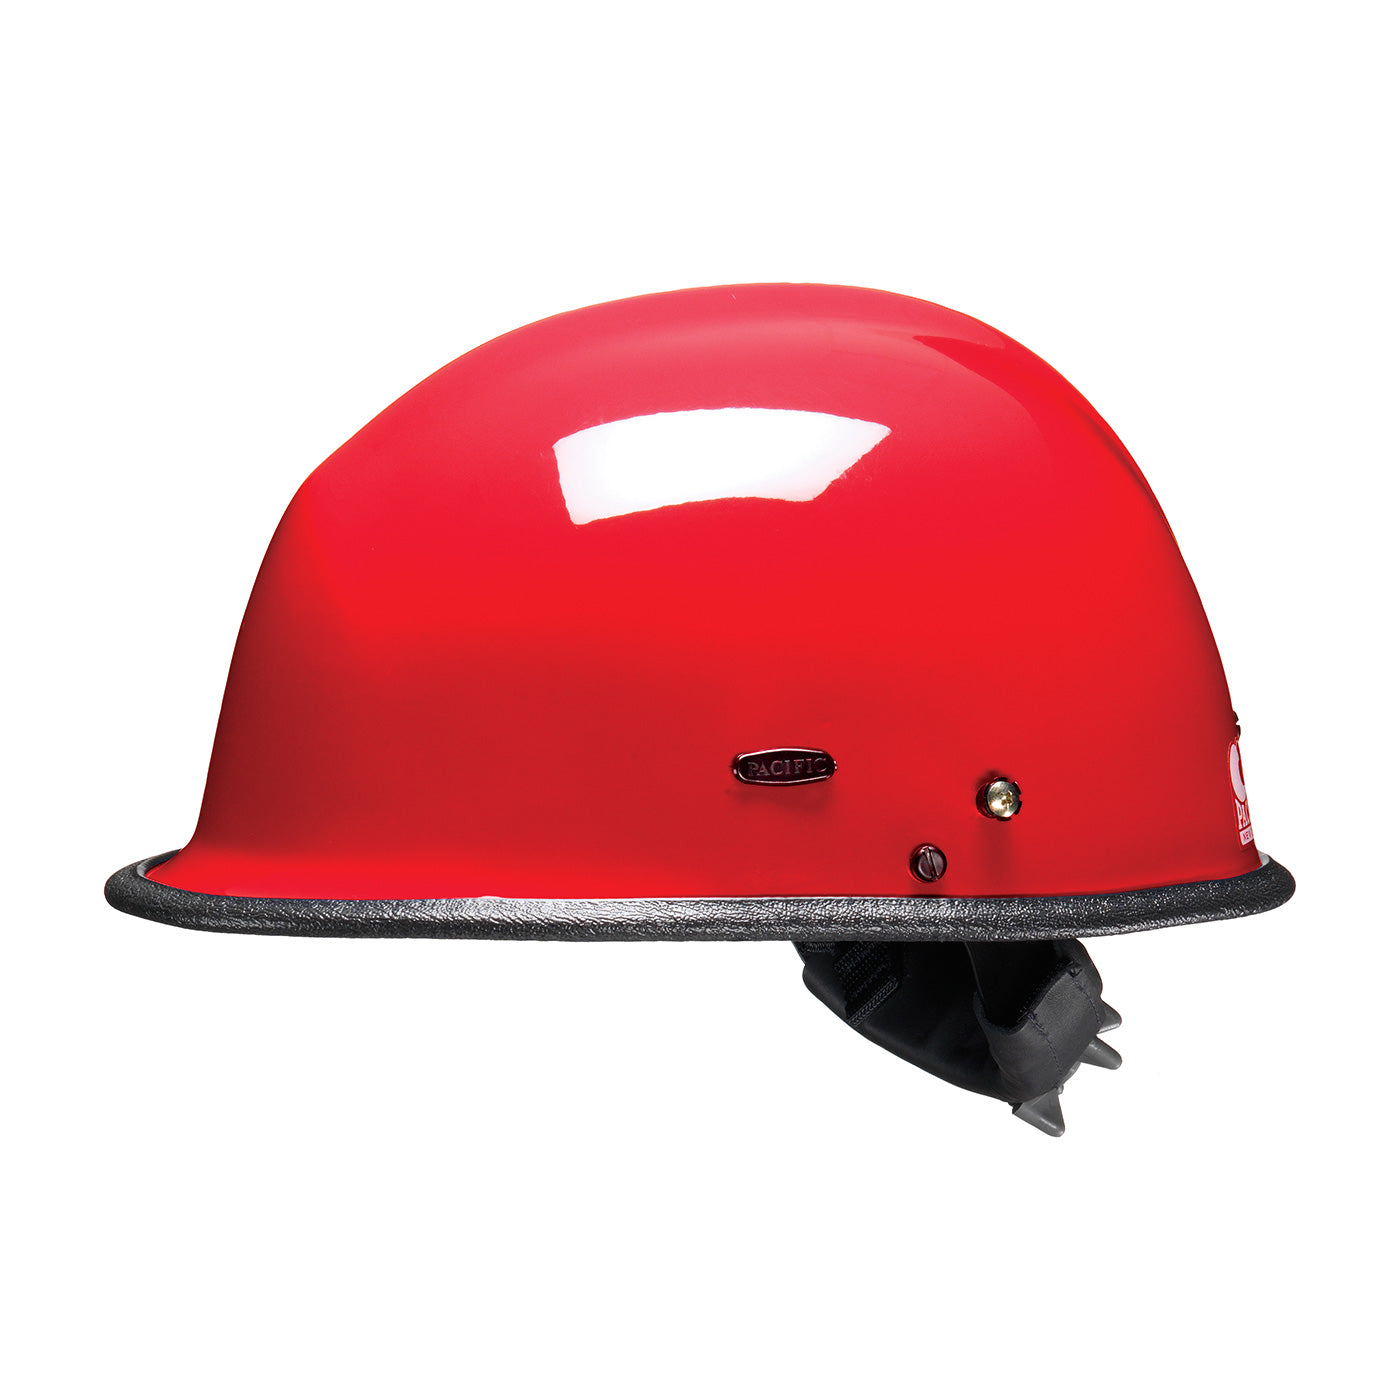 R3 Kiwi Rescue Helmet with ESS Goggle Mounts